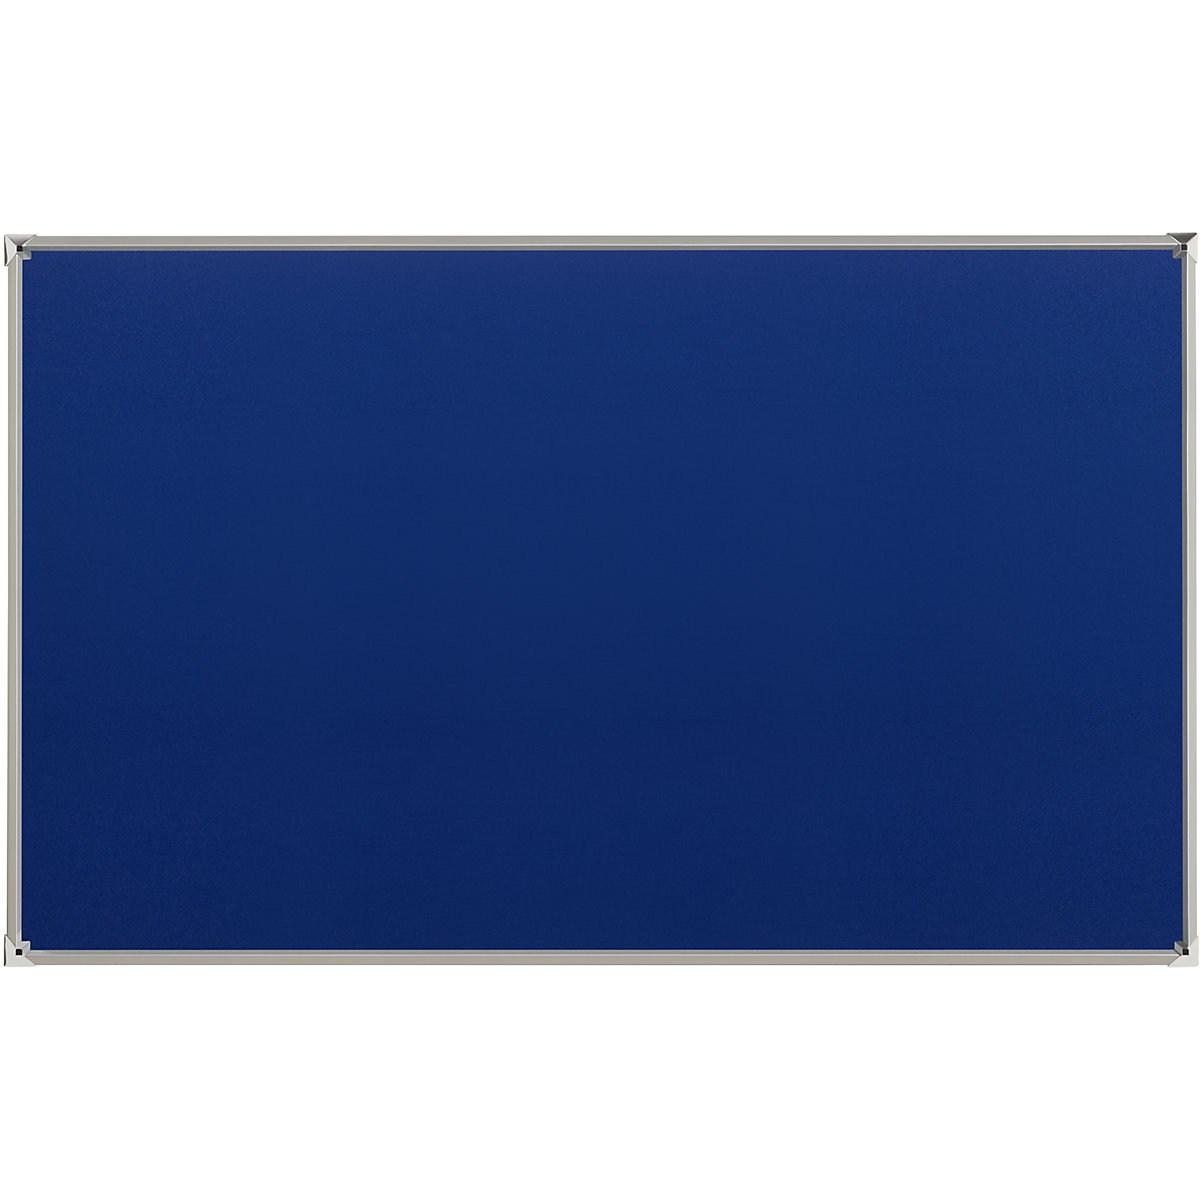 Tableau d'épinglage à cadre en aluminium – eurokraft pro, habillage tissu bleu, l x h 1800 x 1200 mm-3